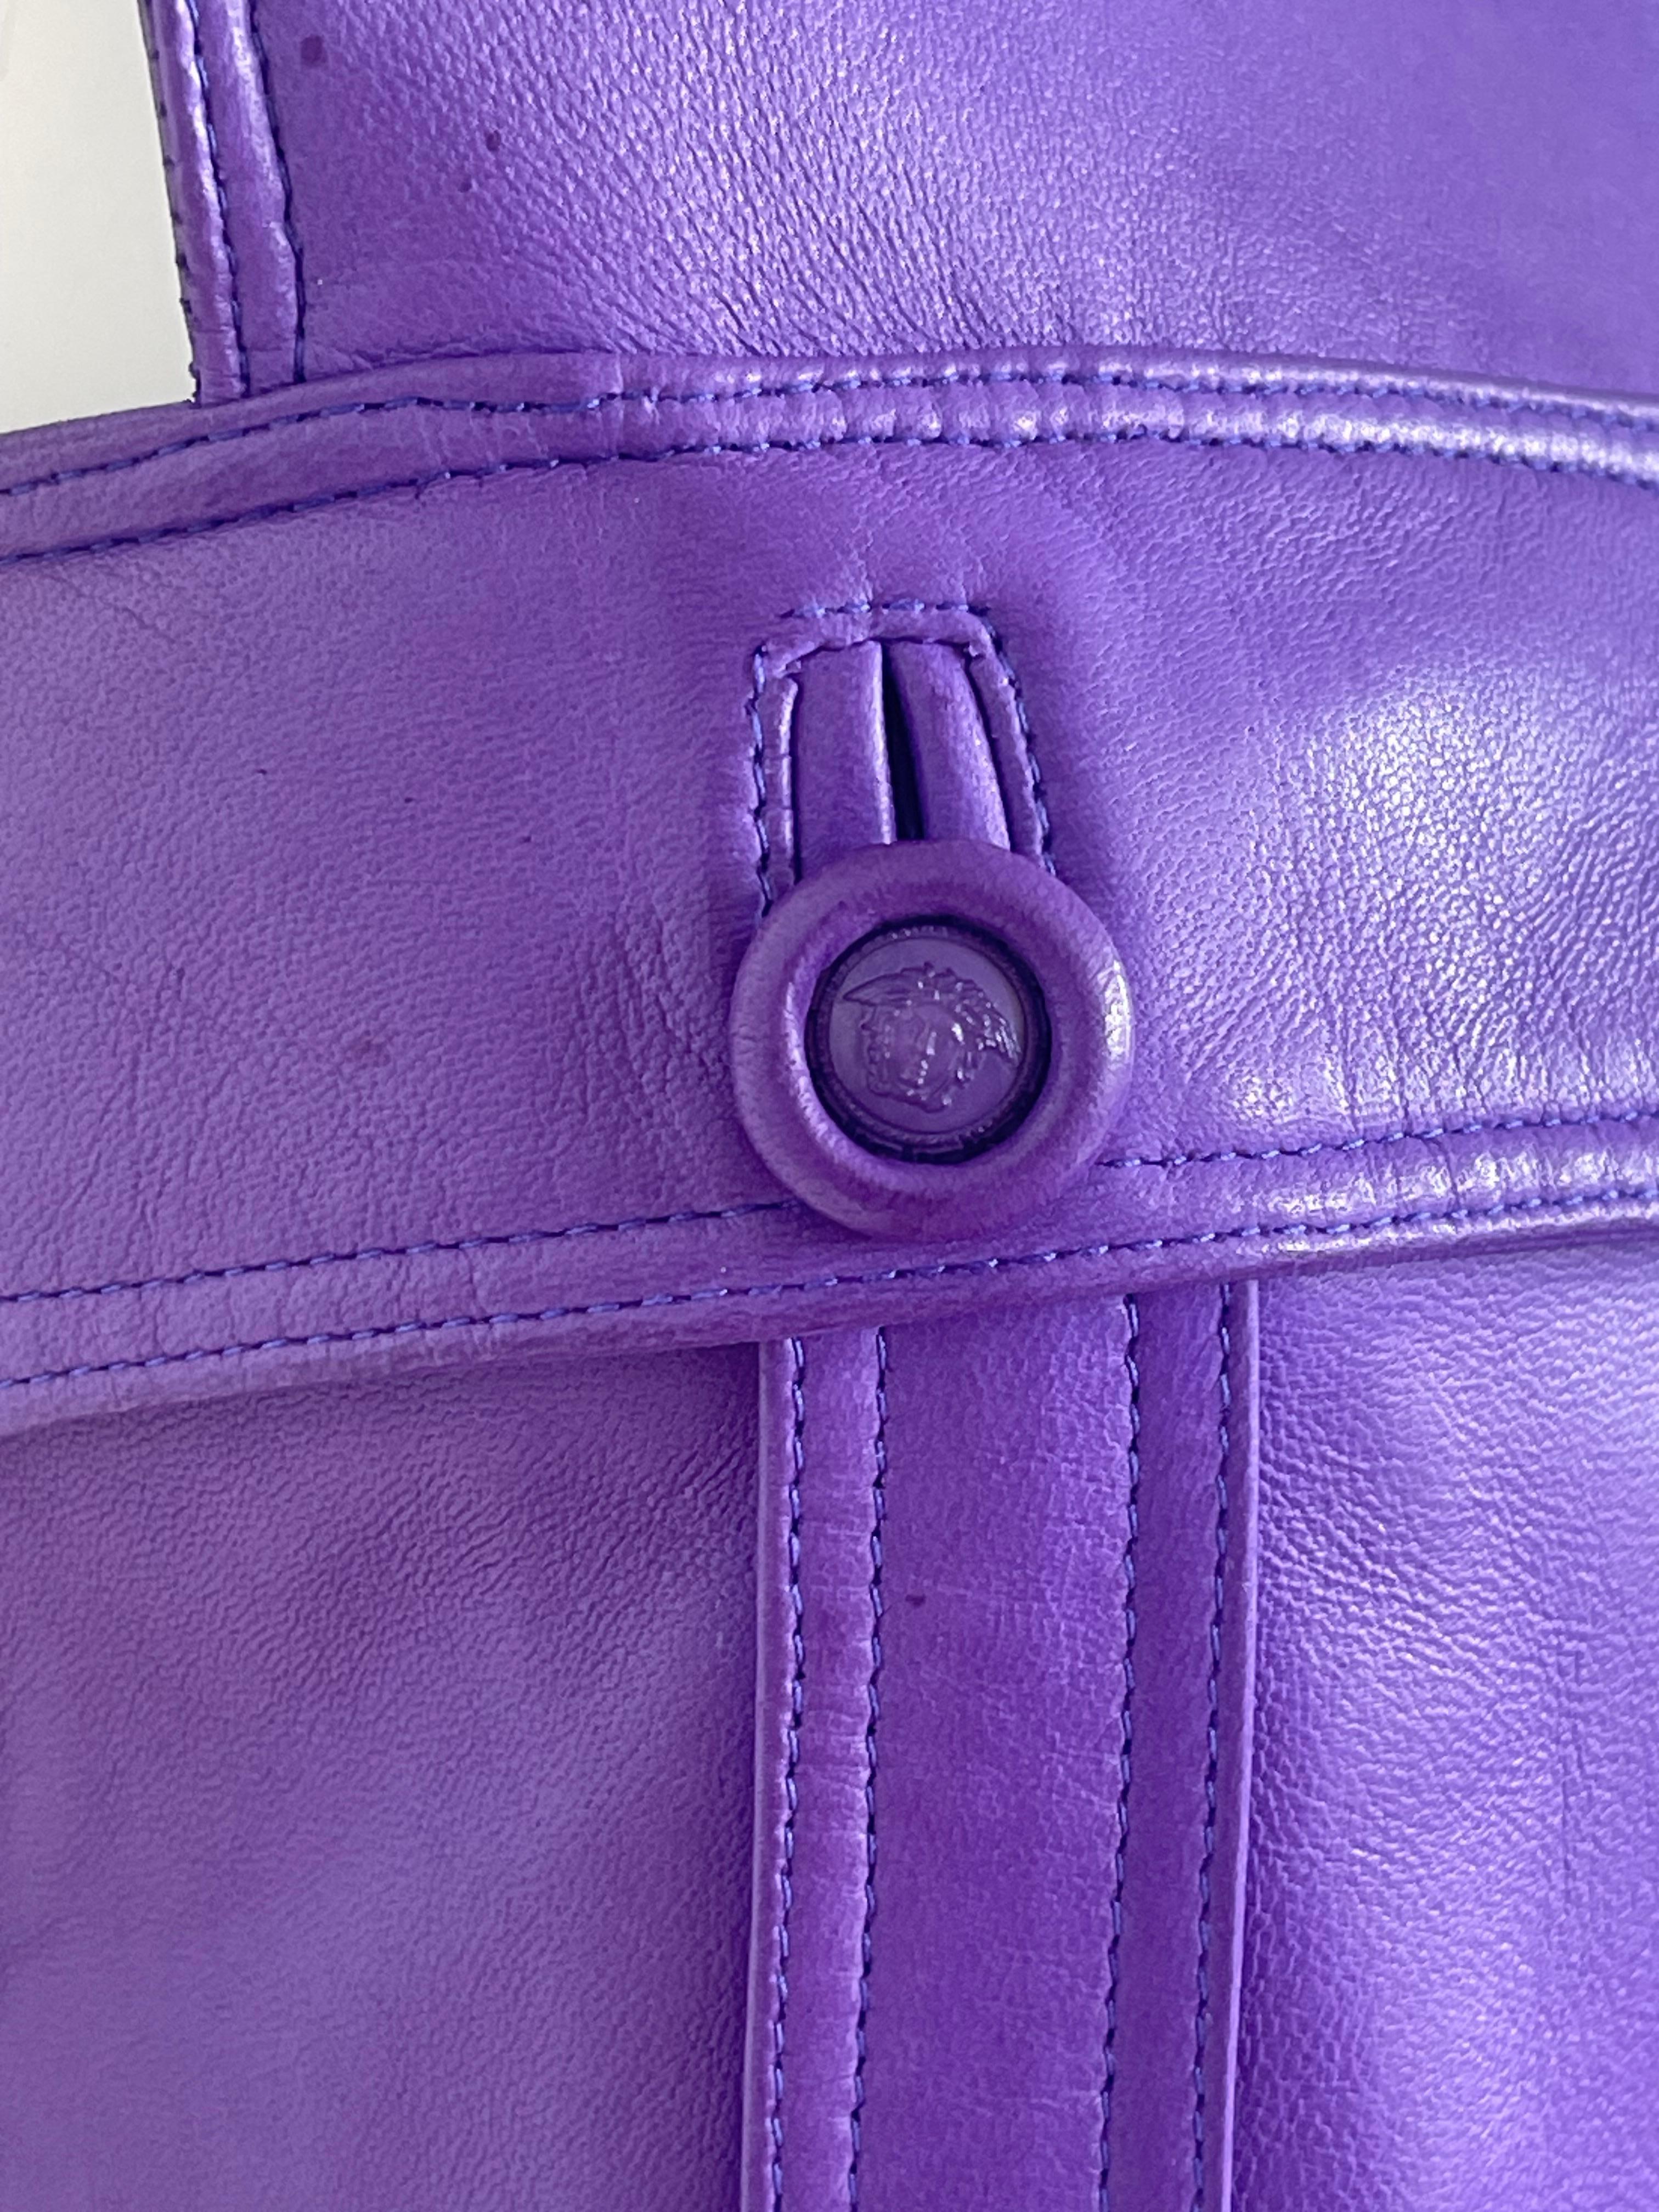 Men's FW 1996 Versace purple leather shift dress with medusa buttons